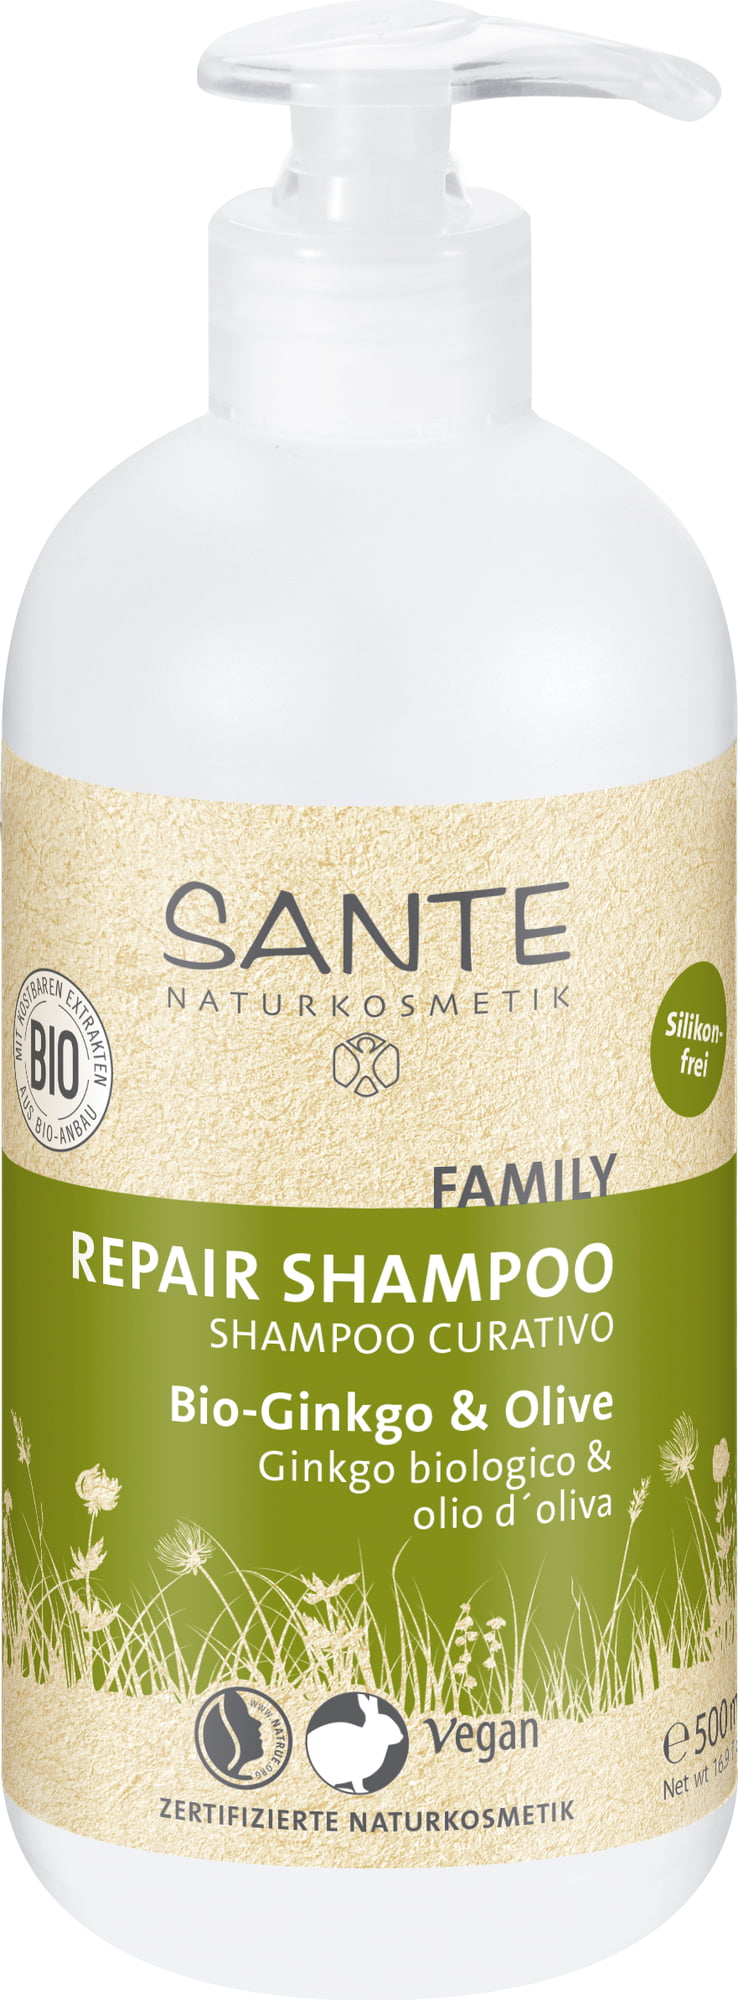 Family Repair Shampoo Organic Ginkgo & Olive - 500 ml